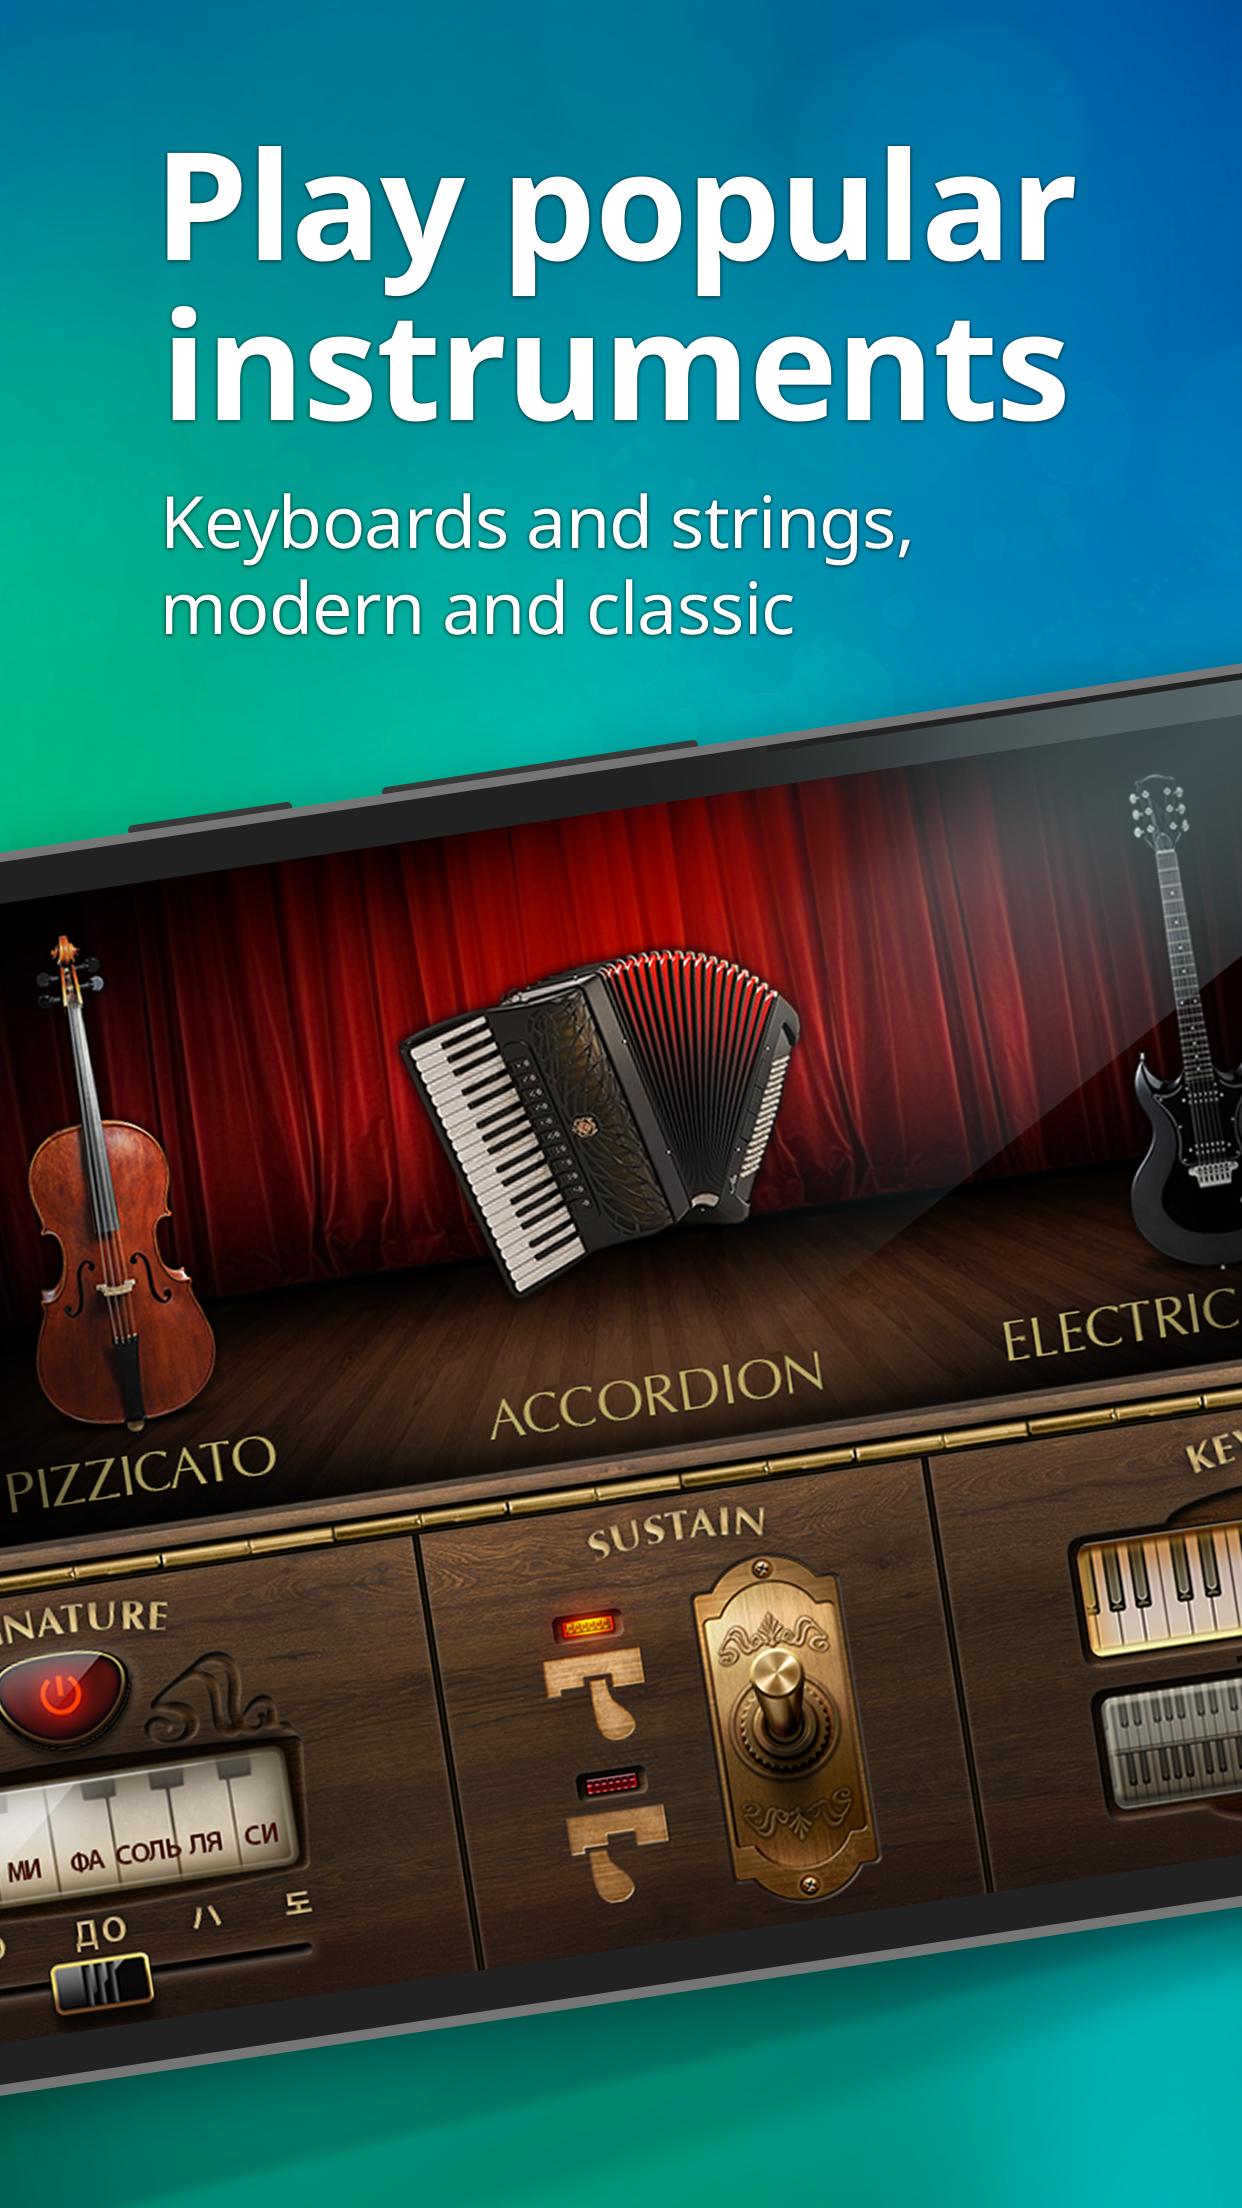 Piano Free - Keyboard with Magic Tiles Music Games 1.67.1 Screenshot 4